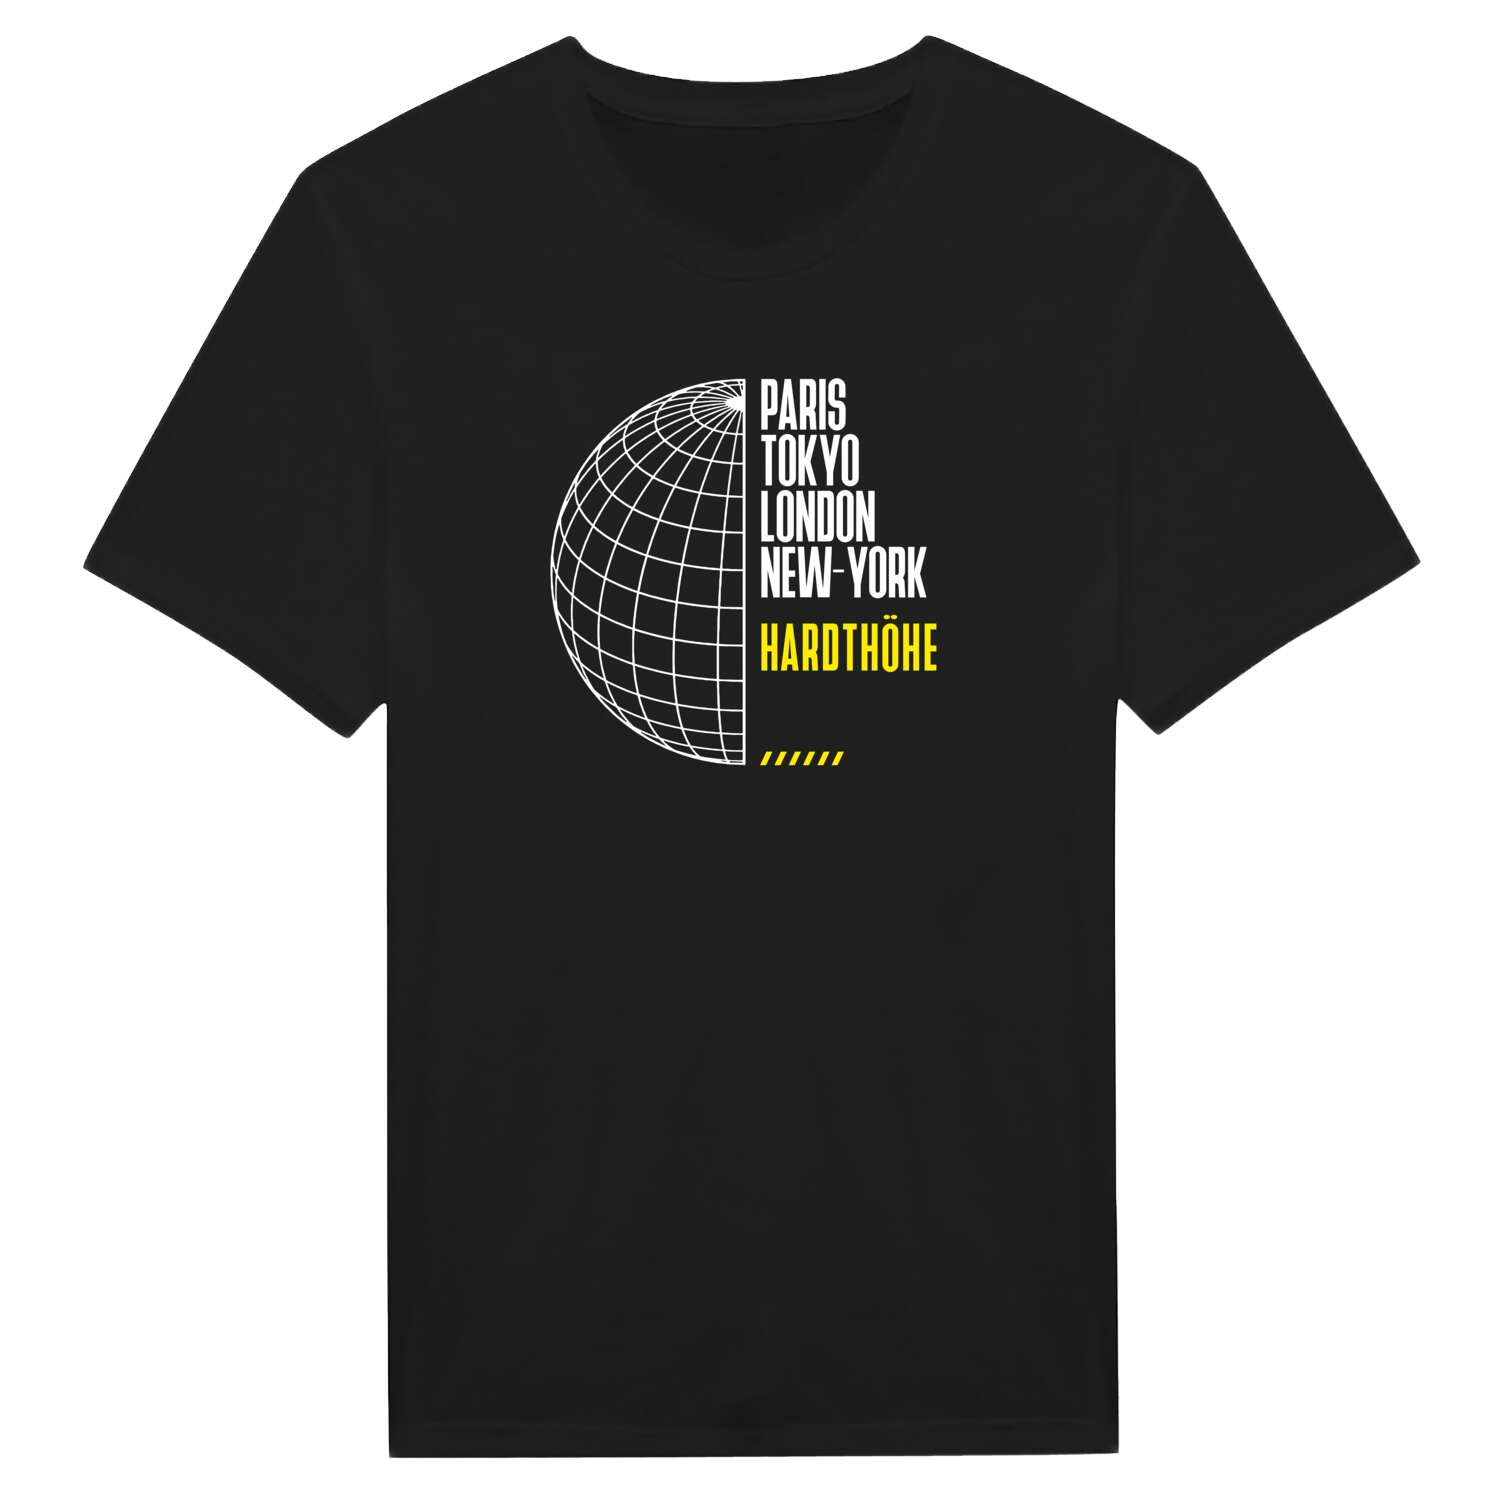 Hardthöhe T-Shirt »Paris Tokyo London«